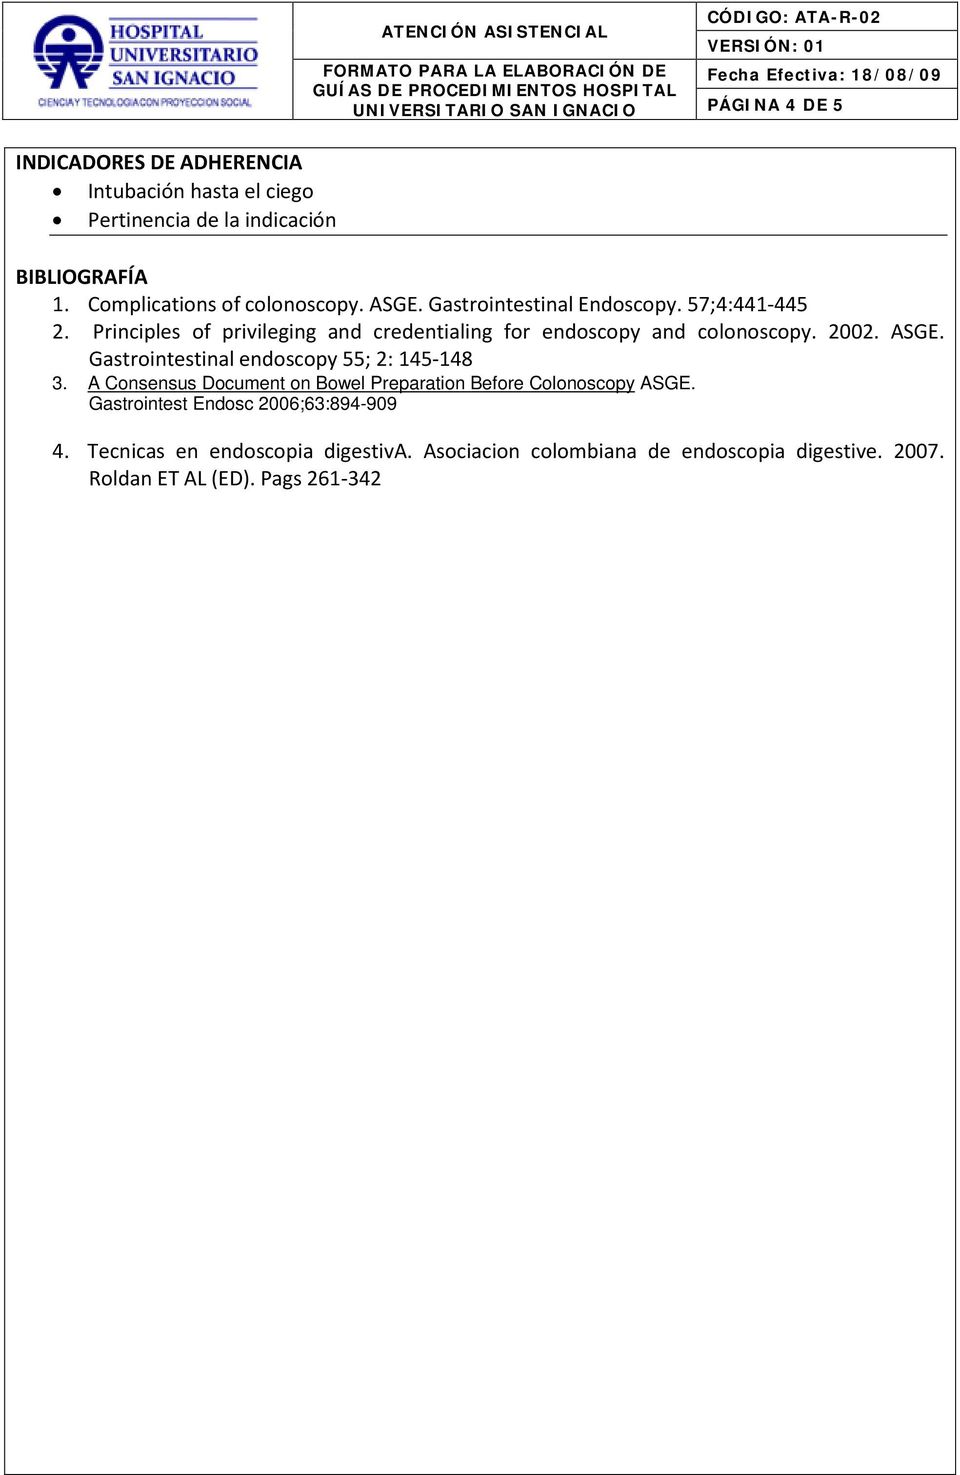 Principles of privileging and credentialing for endoscopy and colonoscopy. 2002. ASGE. Gastrointestinal endoscopy 55; 2: 145-148 3.